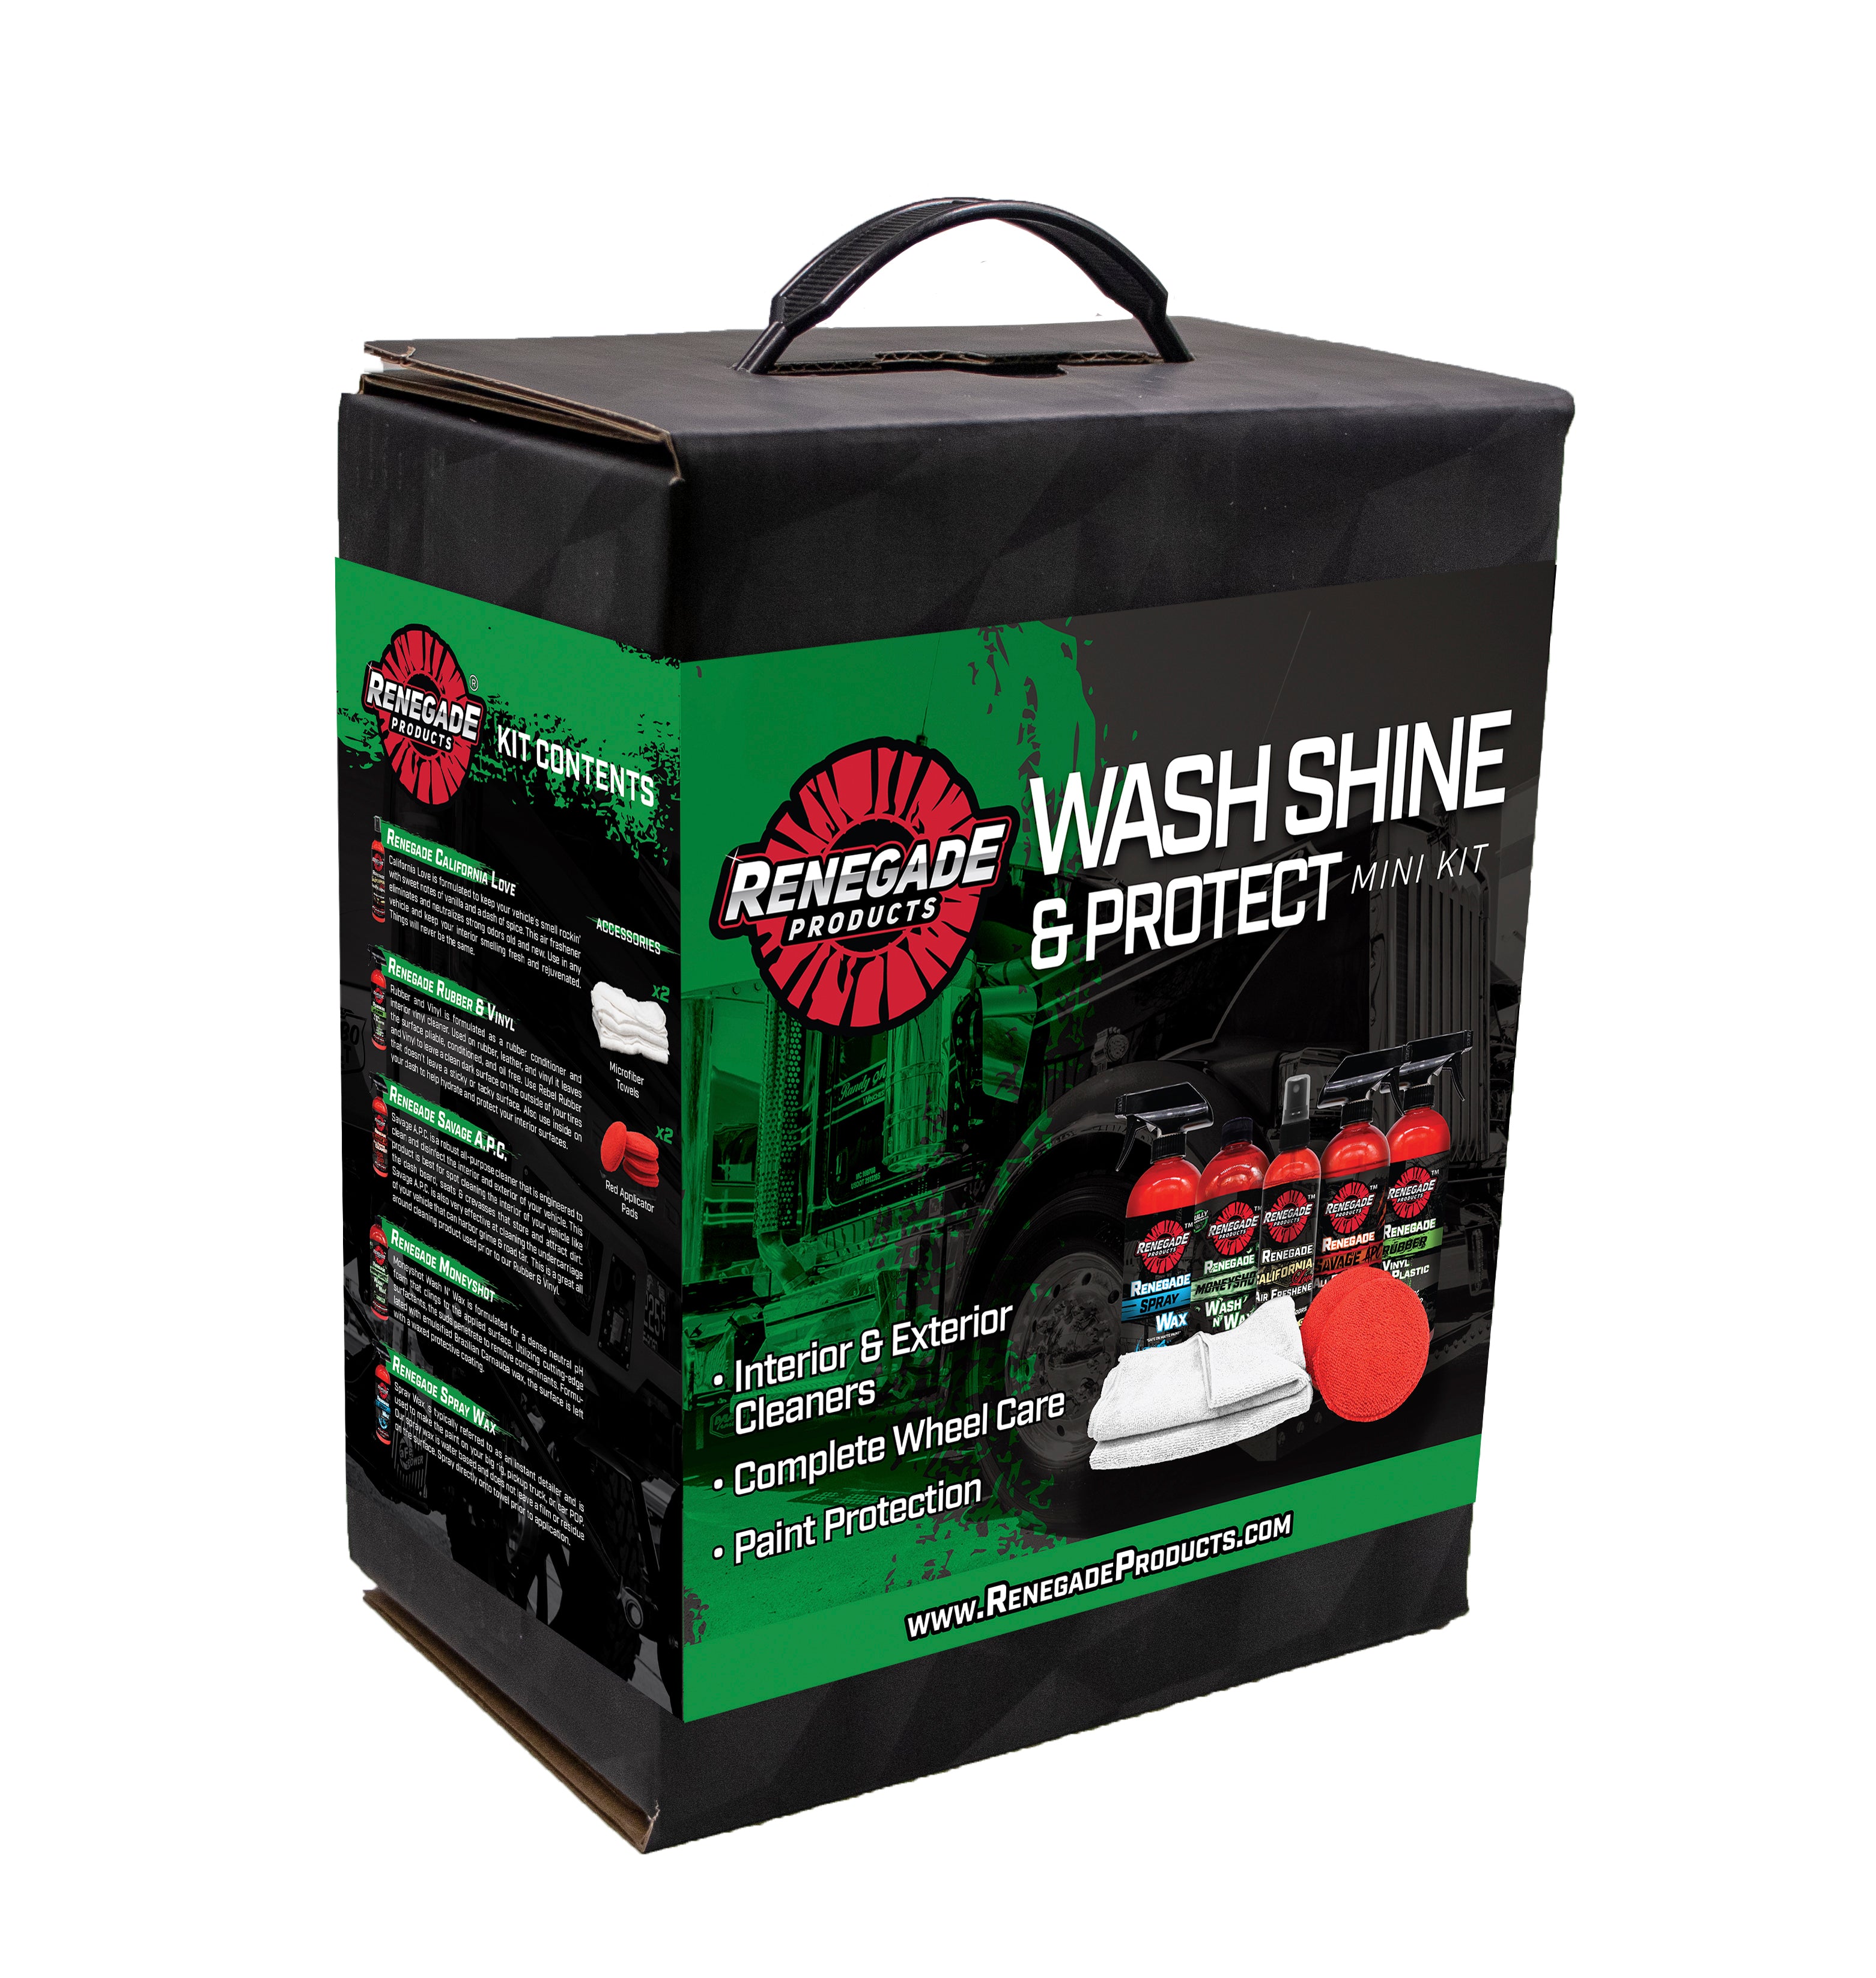 Wash, Shine, & Protect Mini Kit - Renegade Products USA